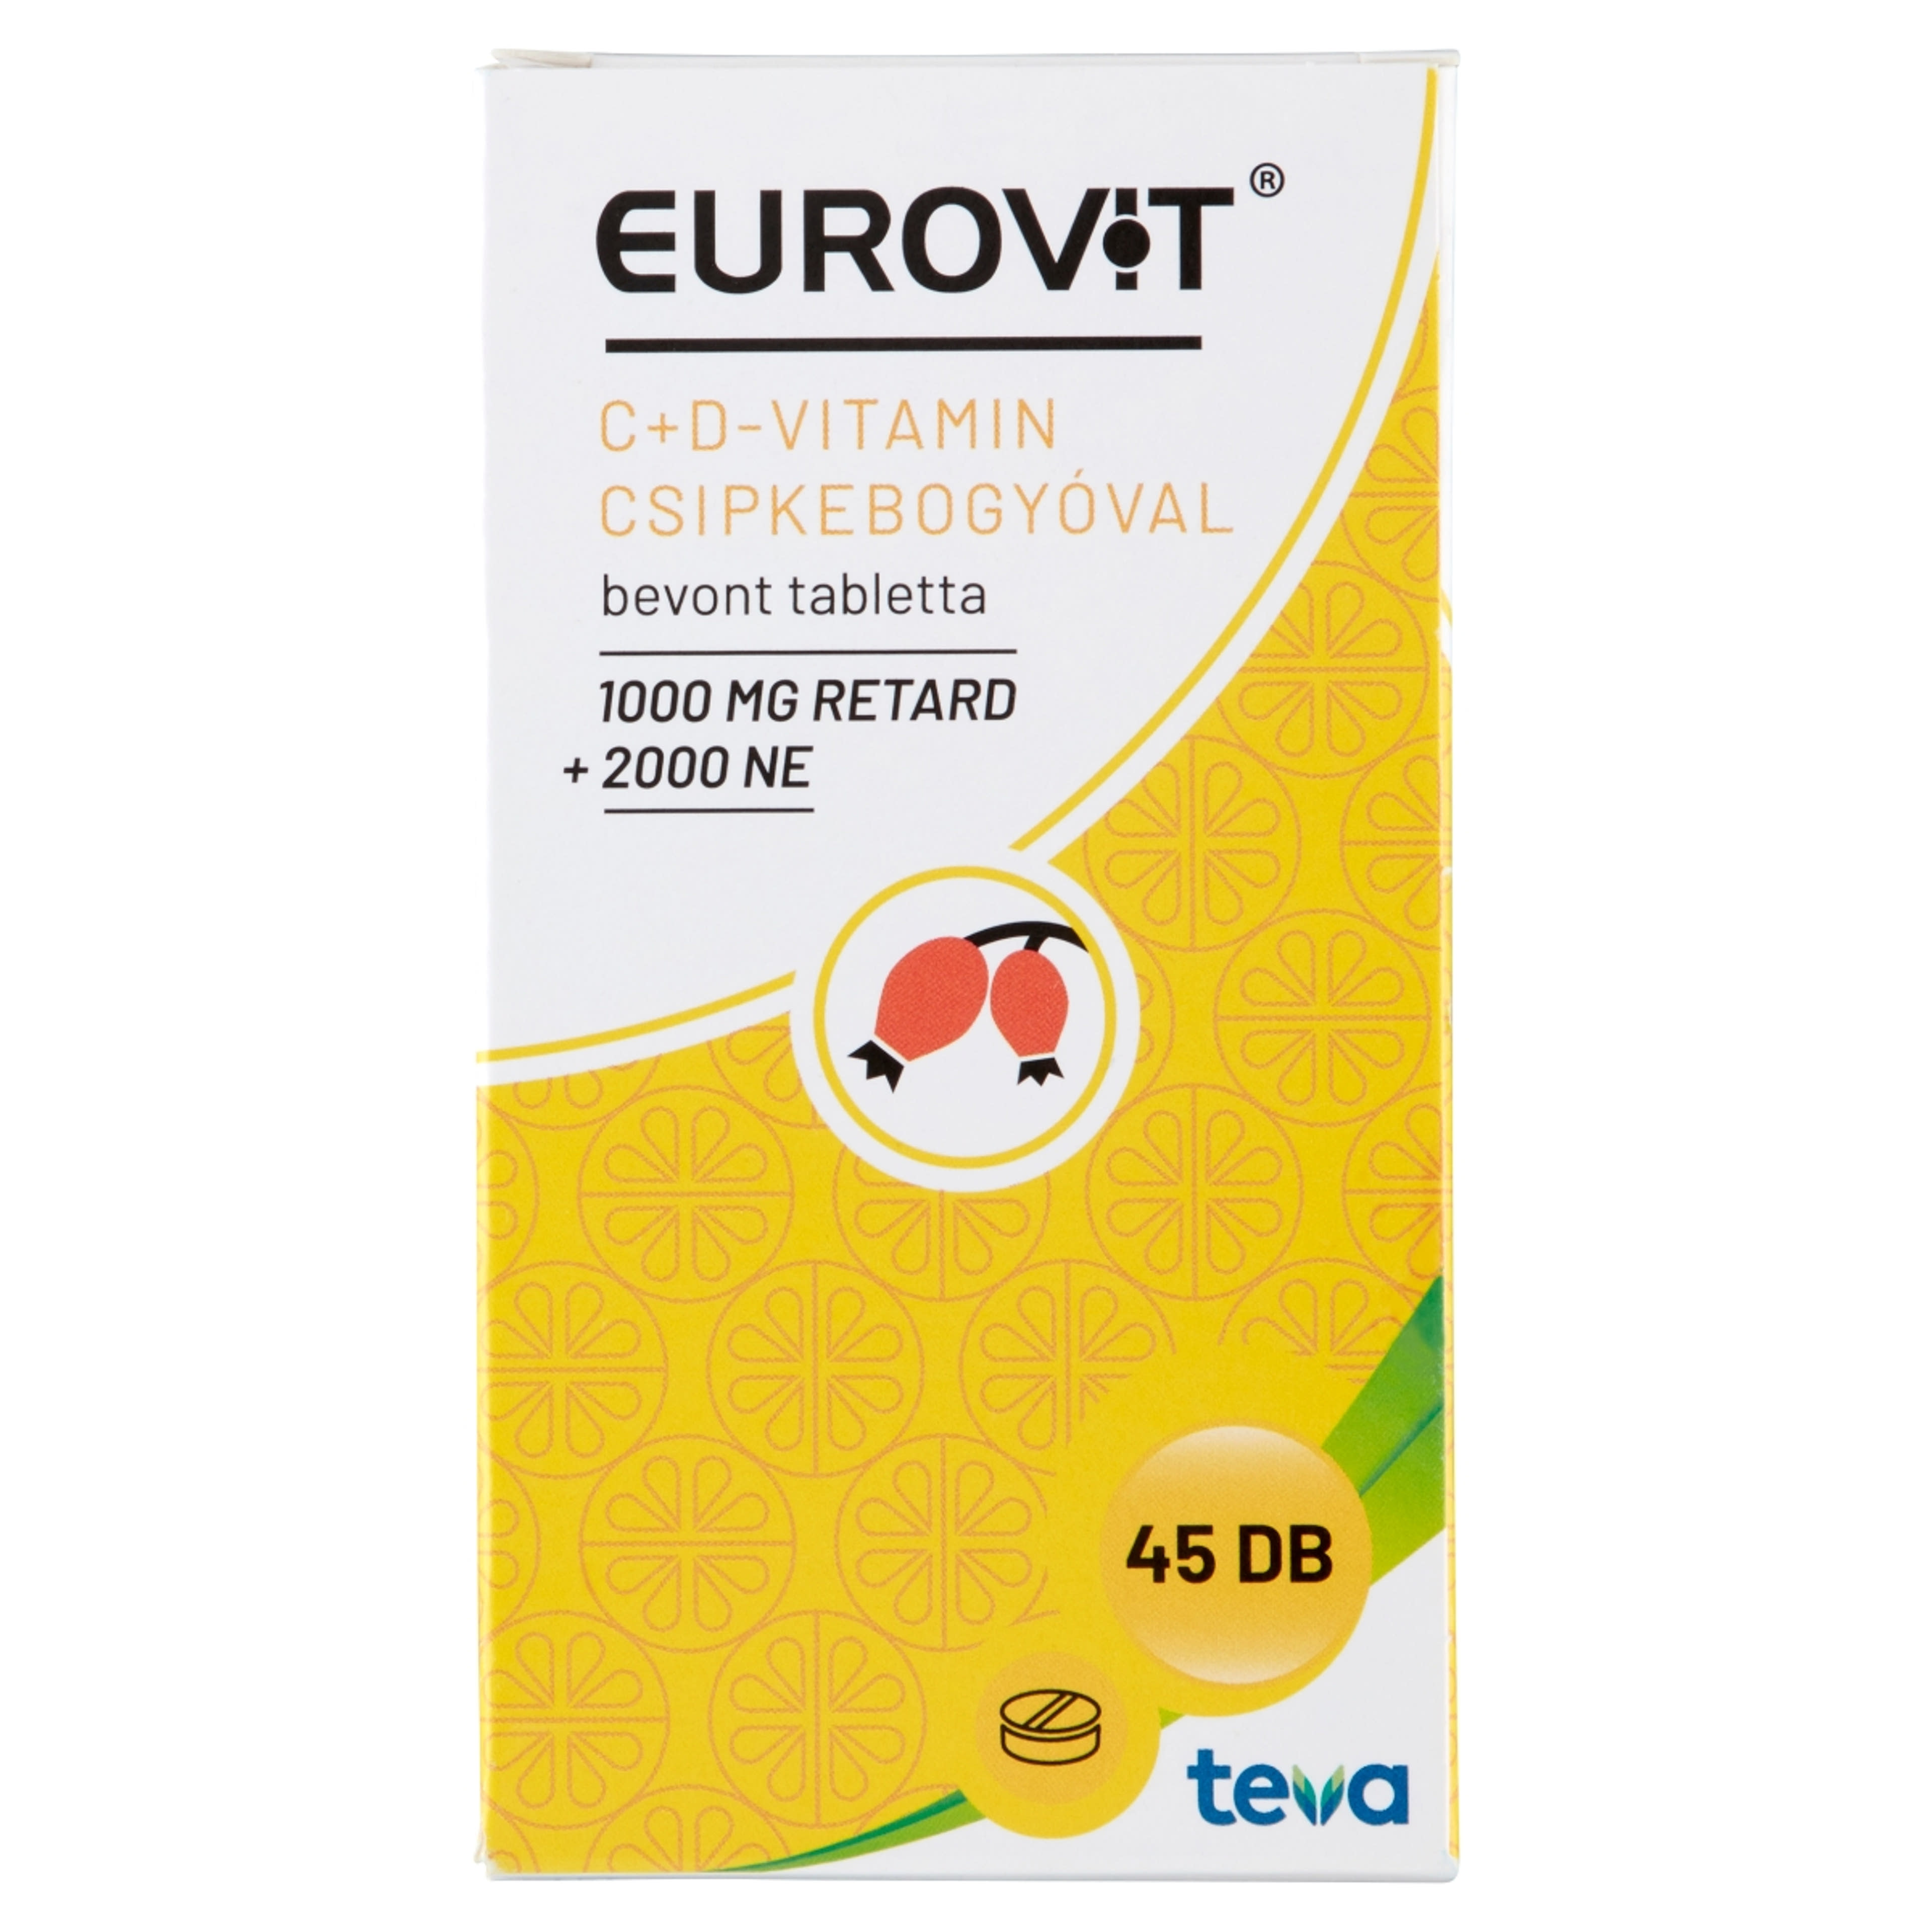 Eurovit C+D vitamin bevont tabletta csipkebogyóval - 45 db